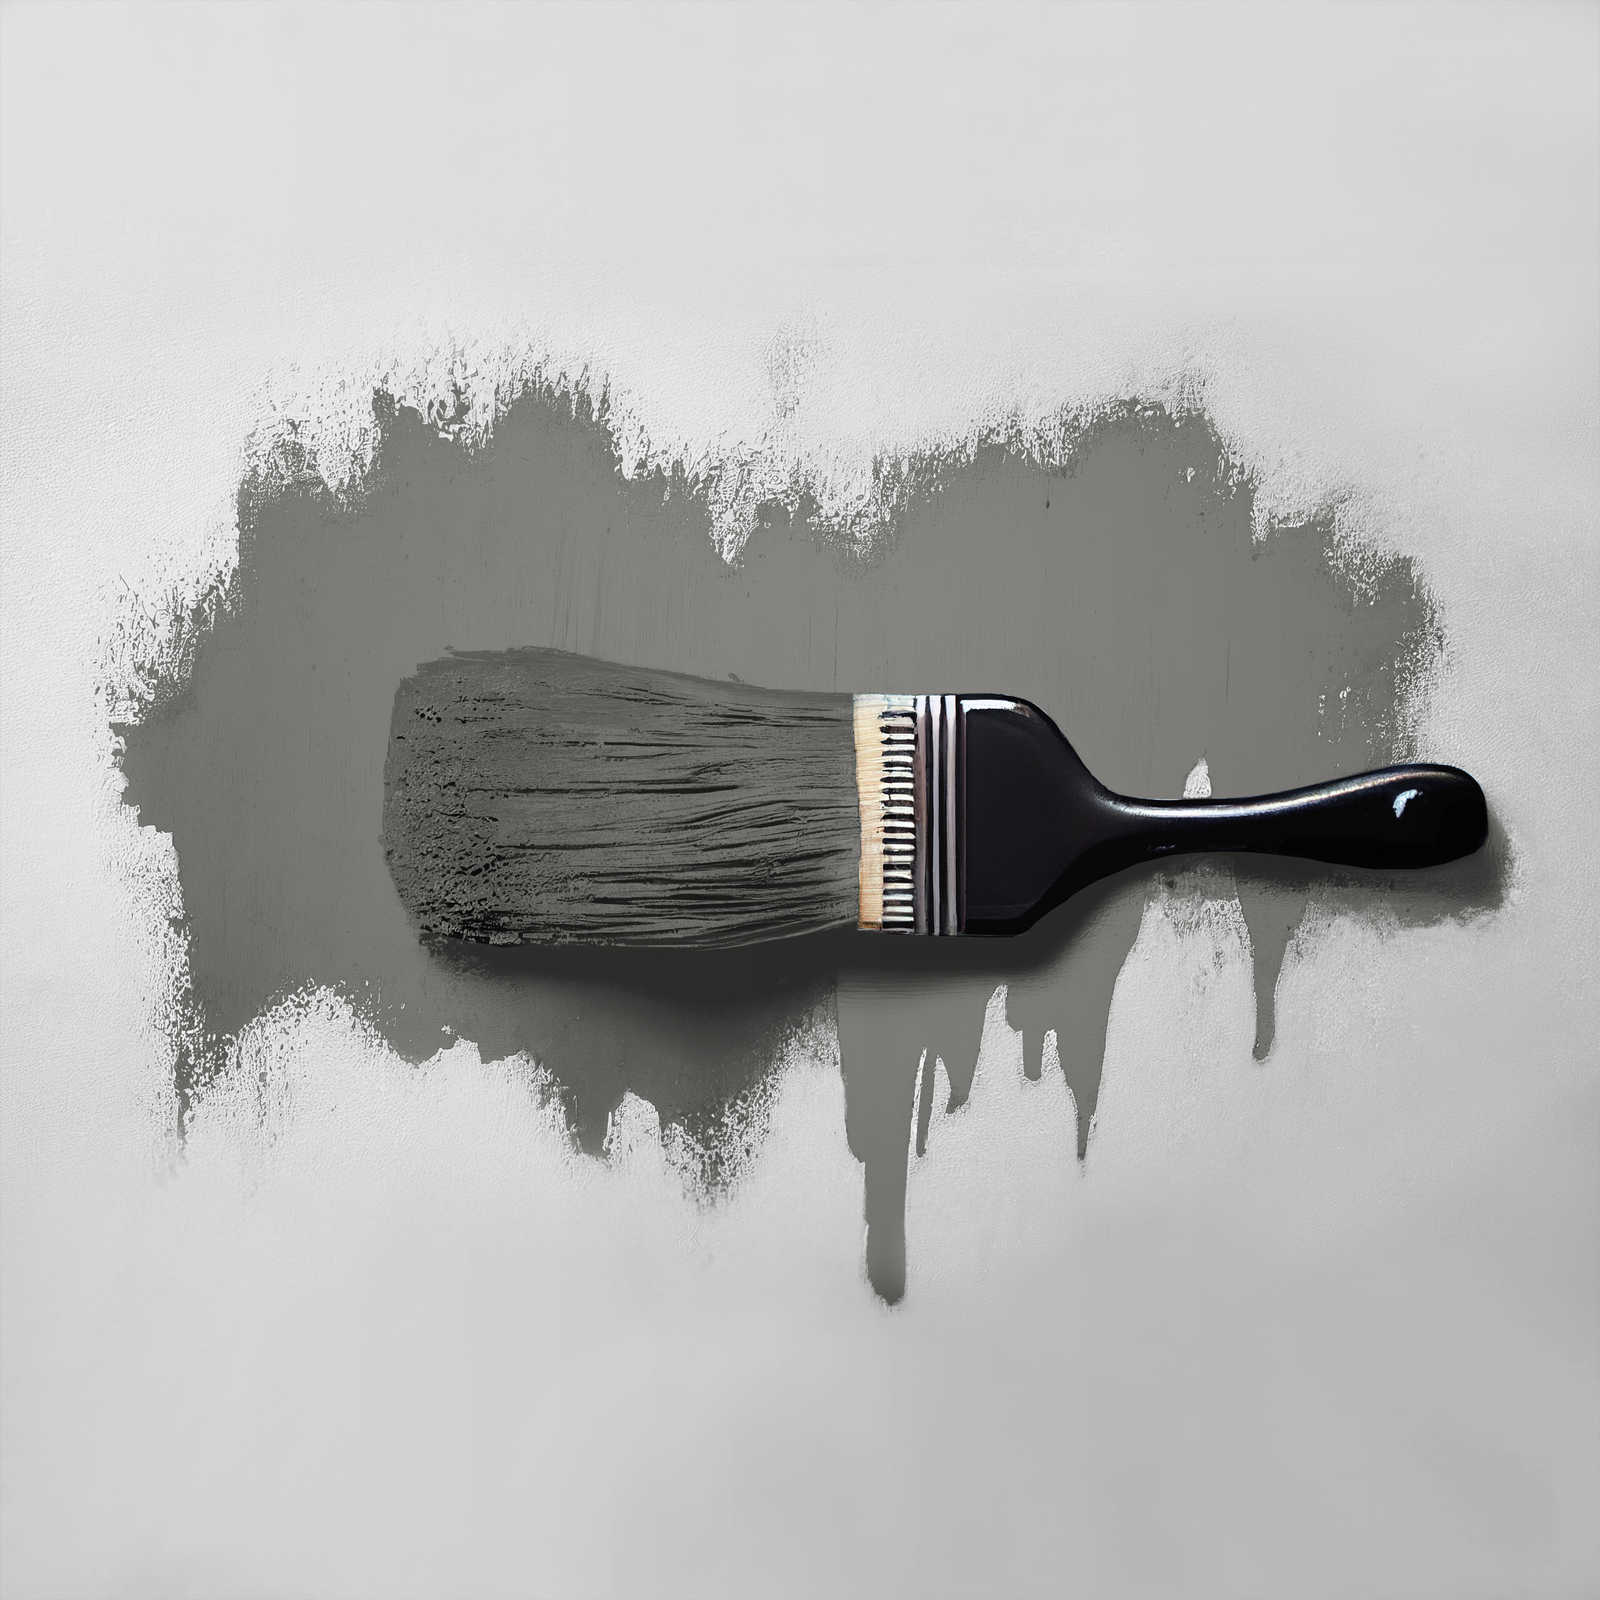             Pittura murale TCK1013 »Poised Pepper« in grigio scuro – 5,0 litri
        